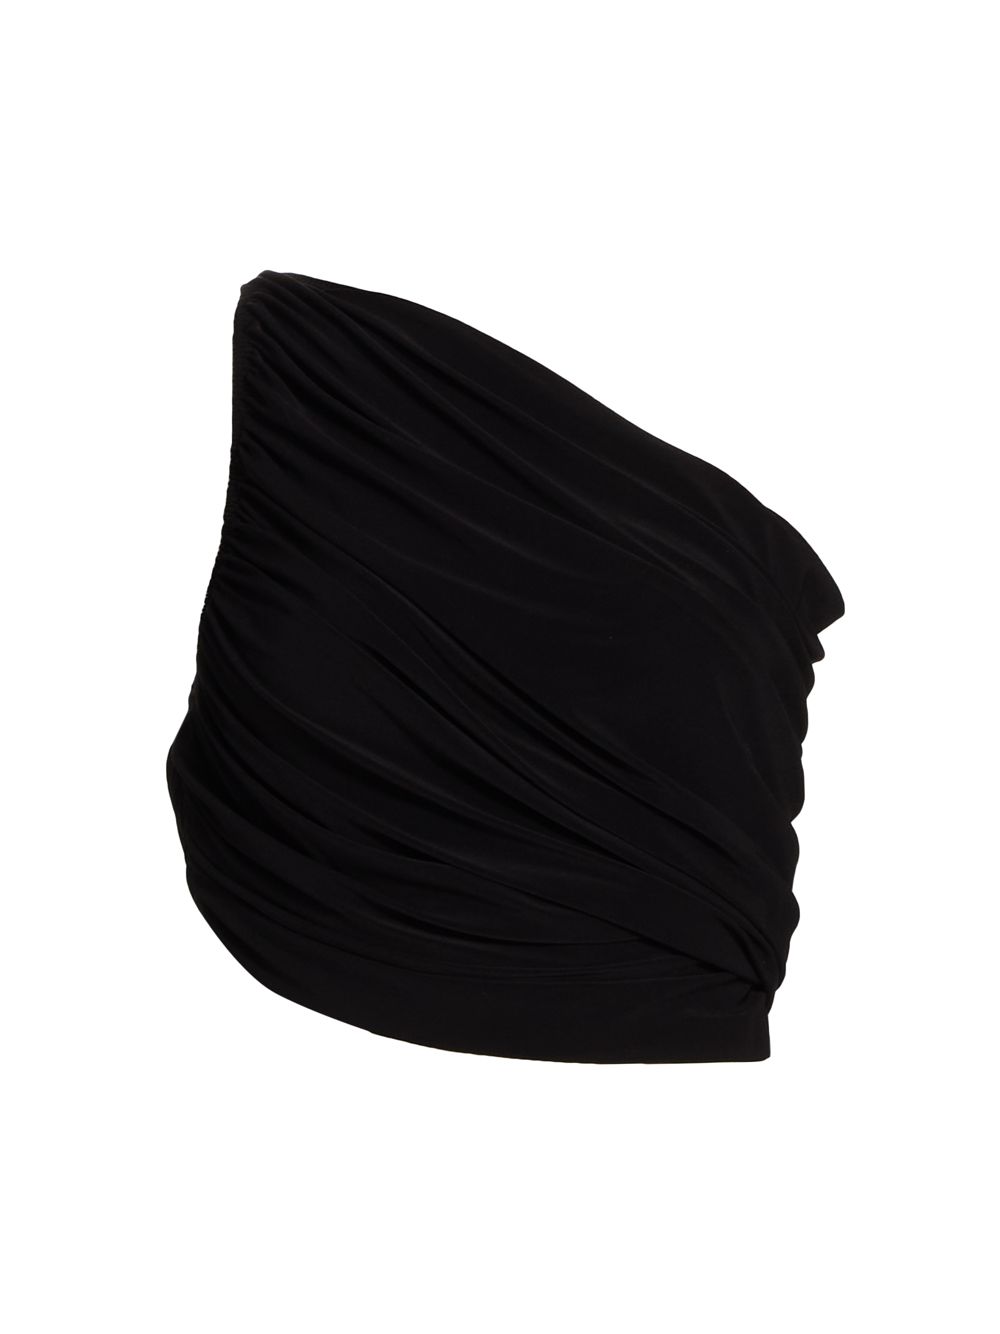 Асимметричный лиф бикини Diana Norma Kamali, черный асимметричные плавки бикини diana norma kamali белый